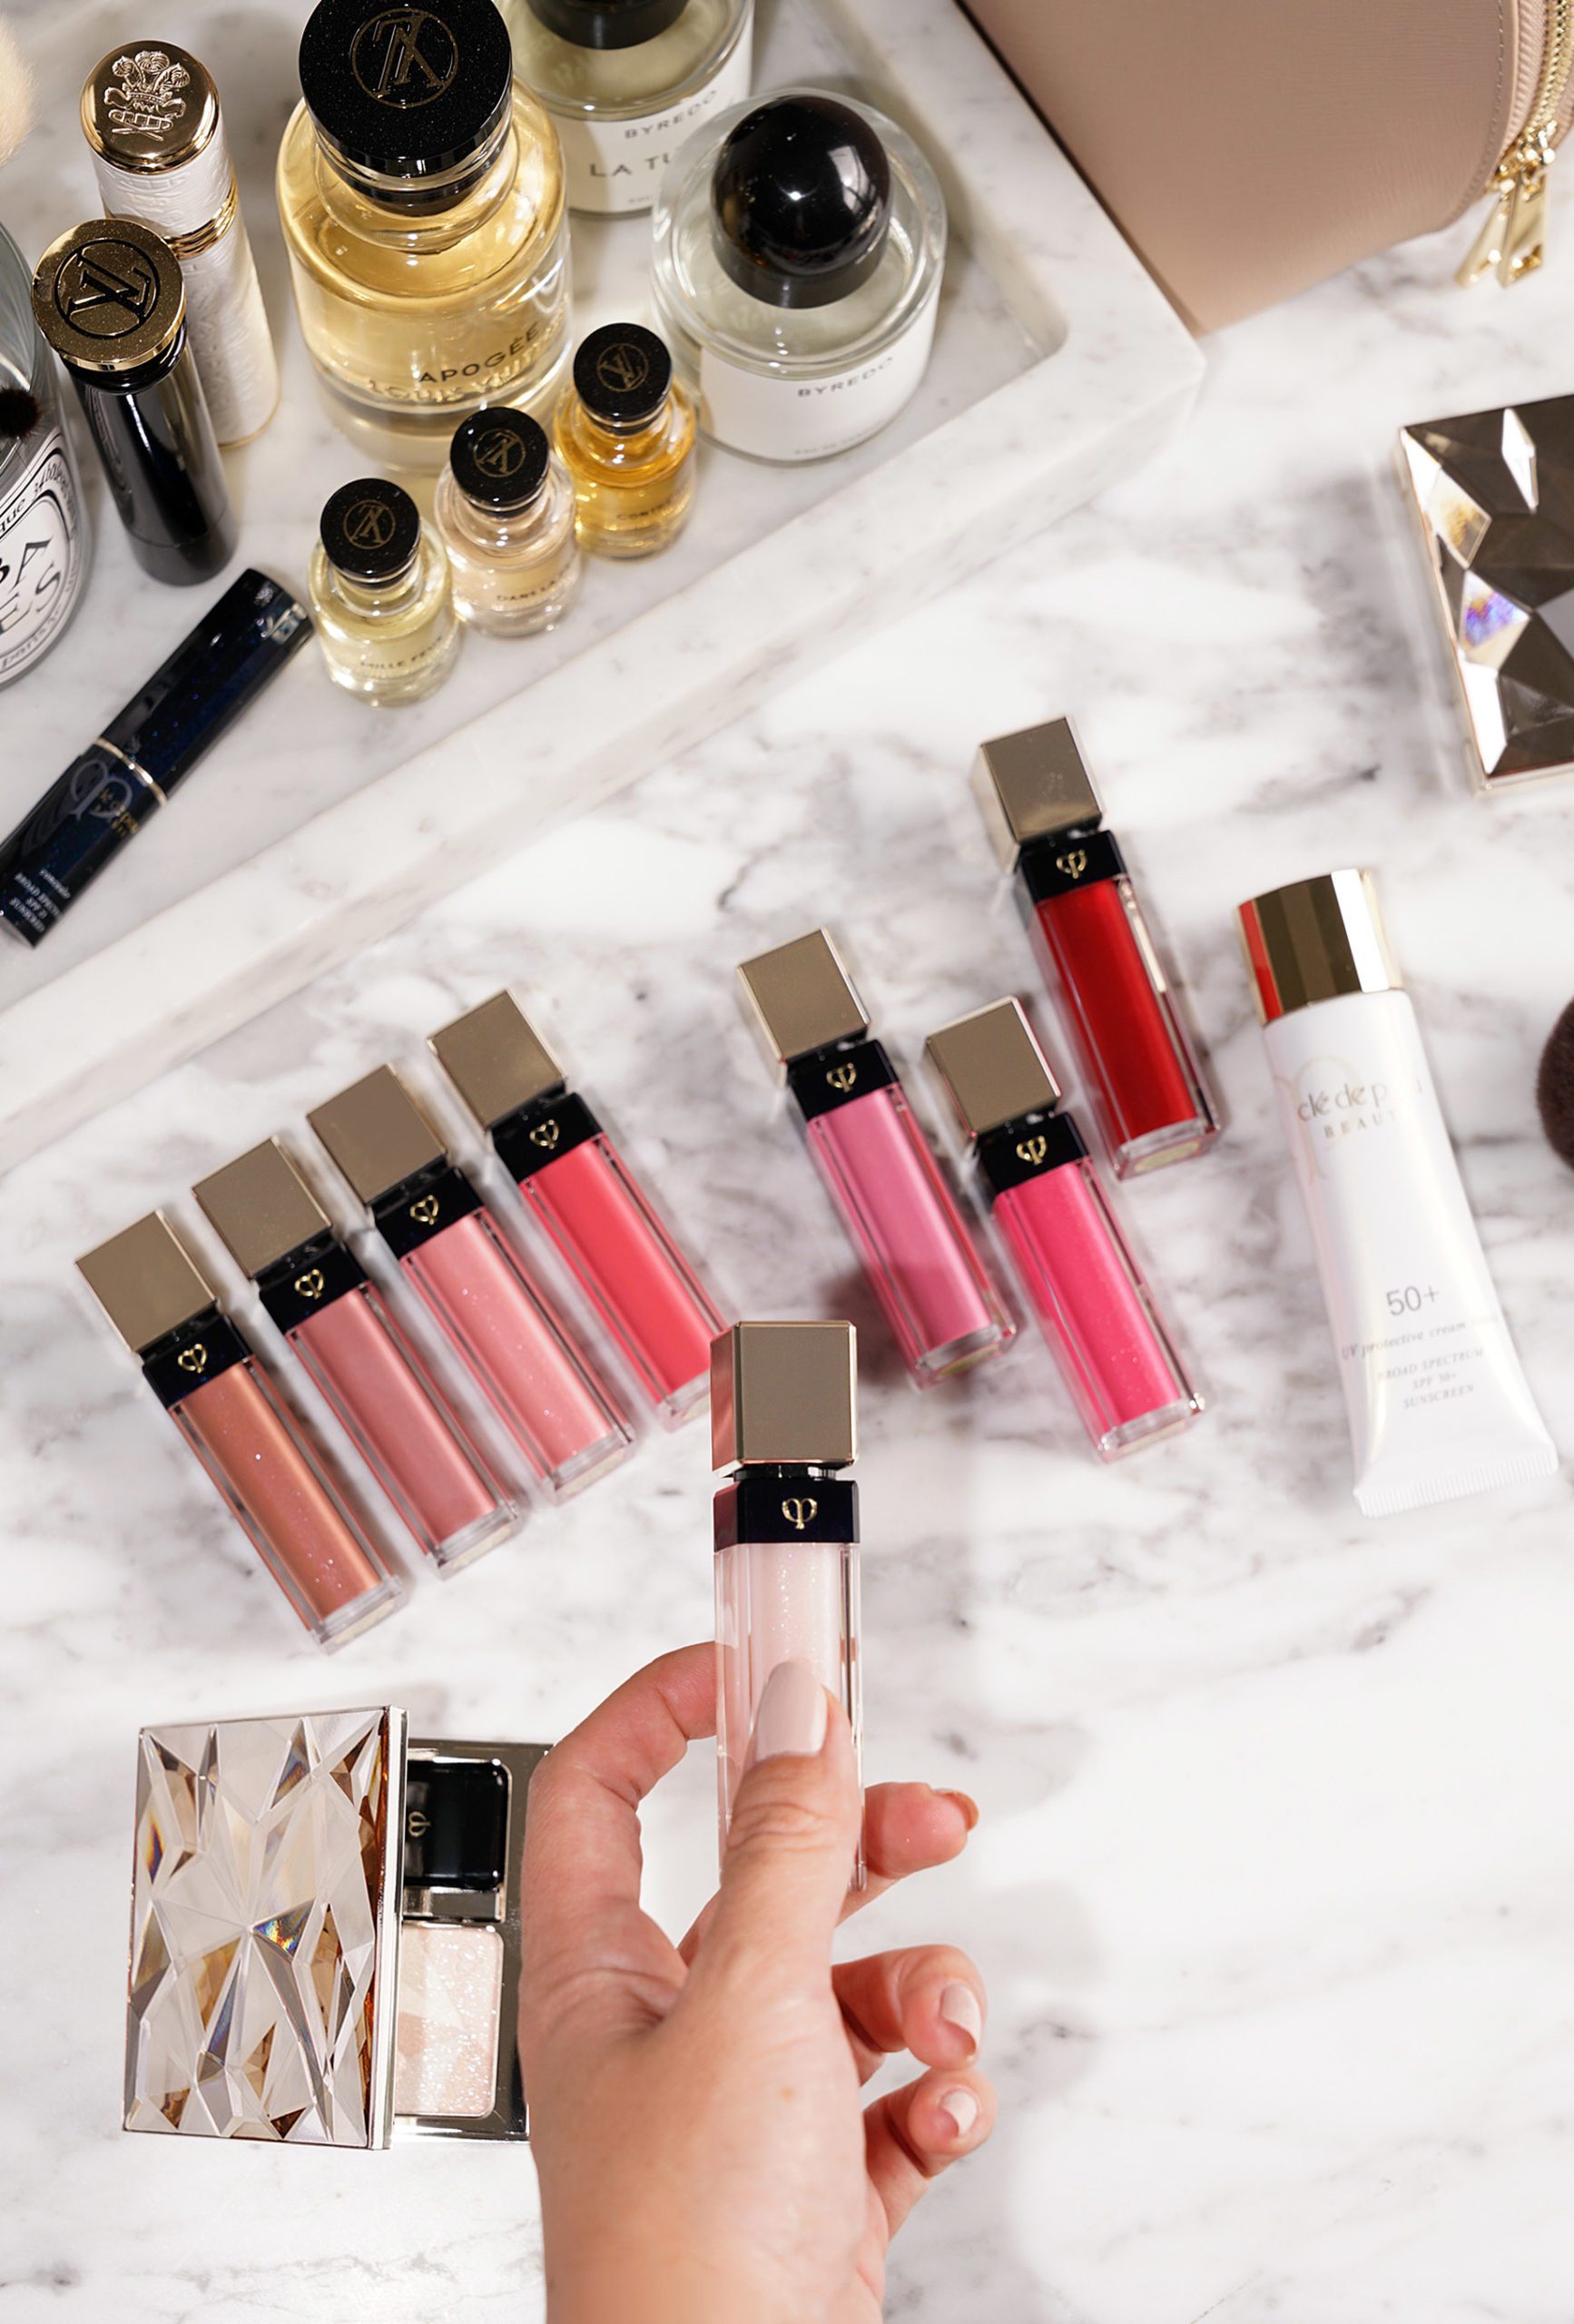 Cle de Peau Beaute Radiant Lip Gloss Review - The Beauty Look Book